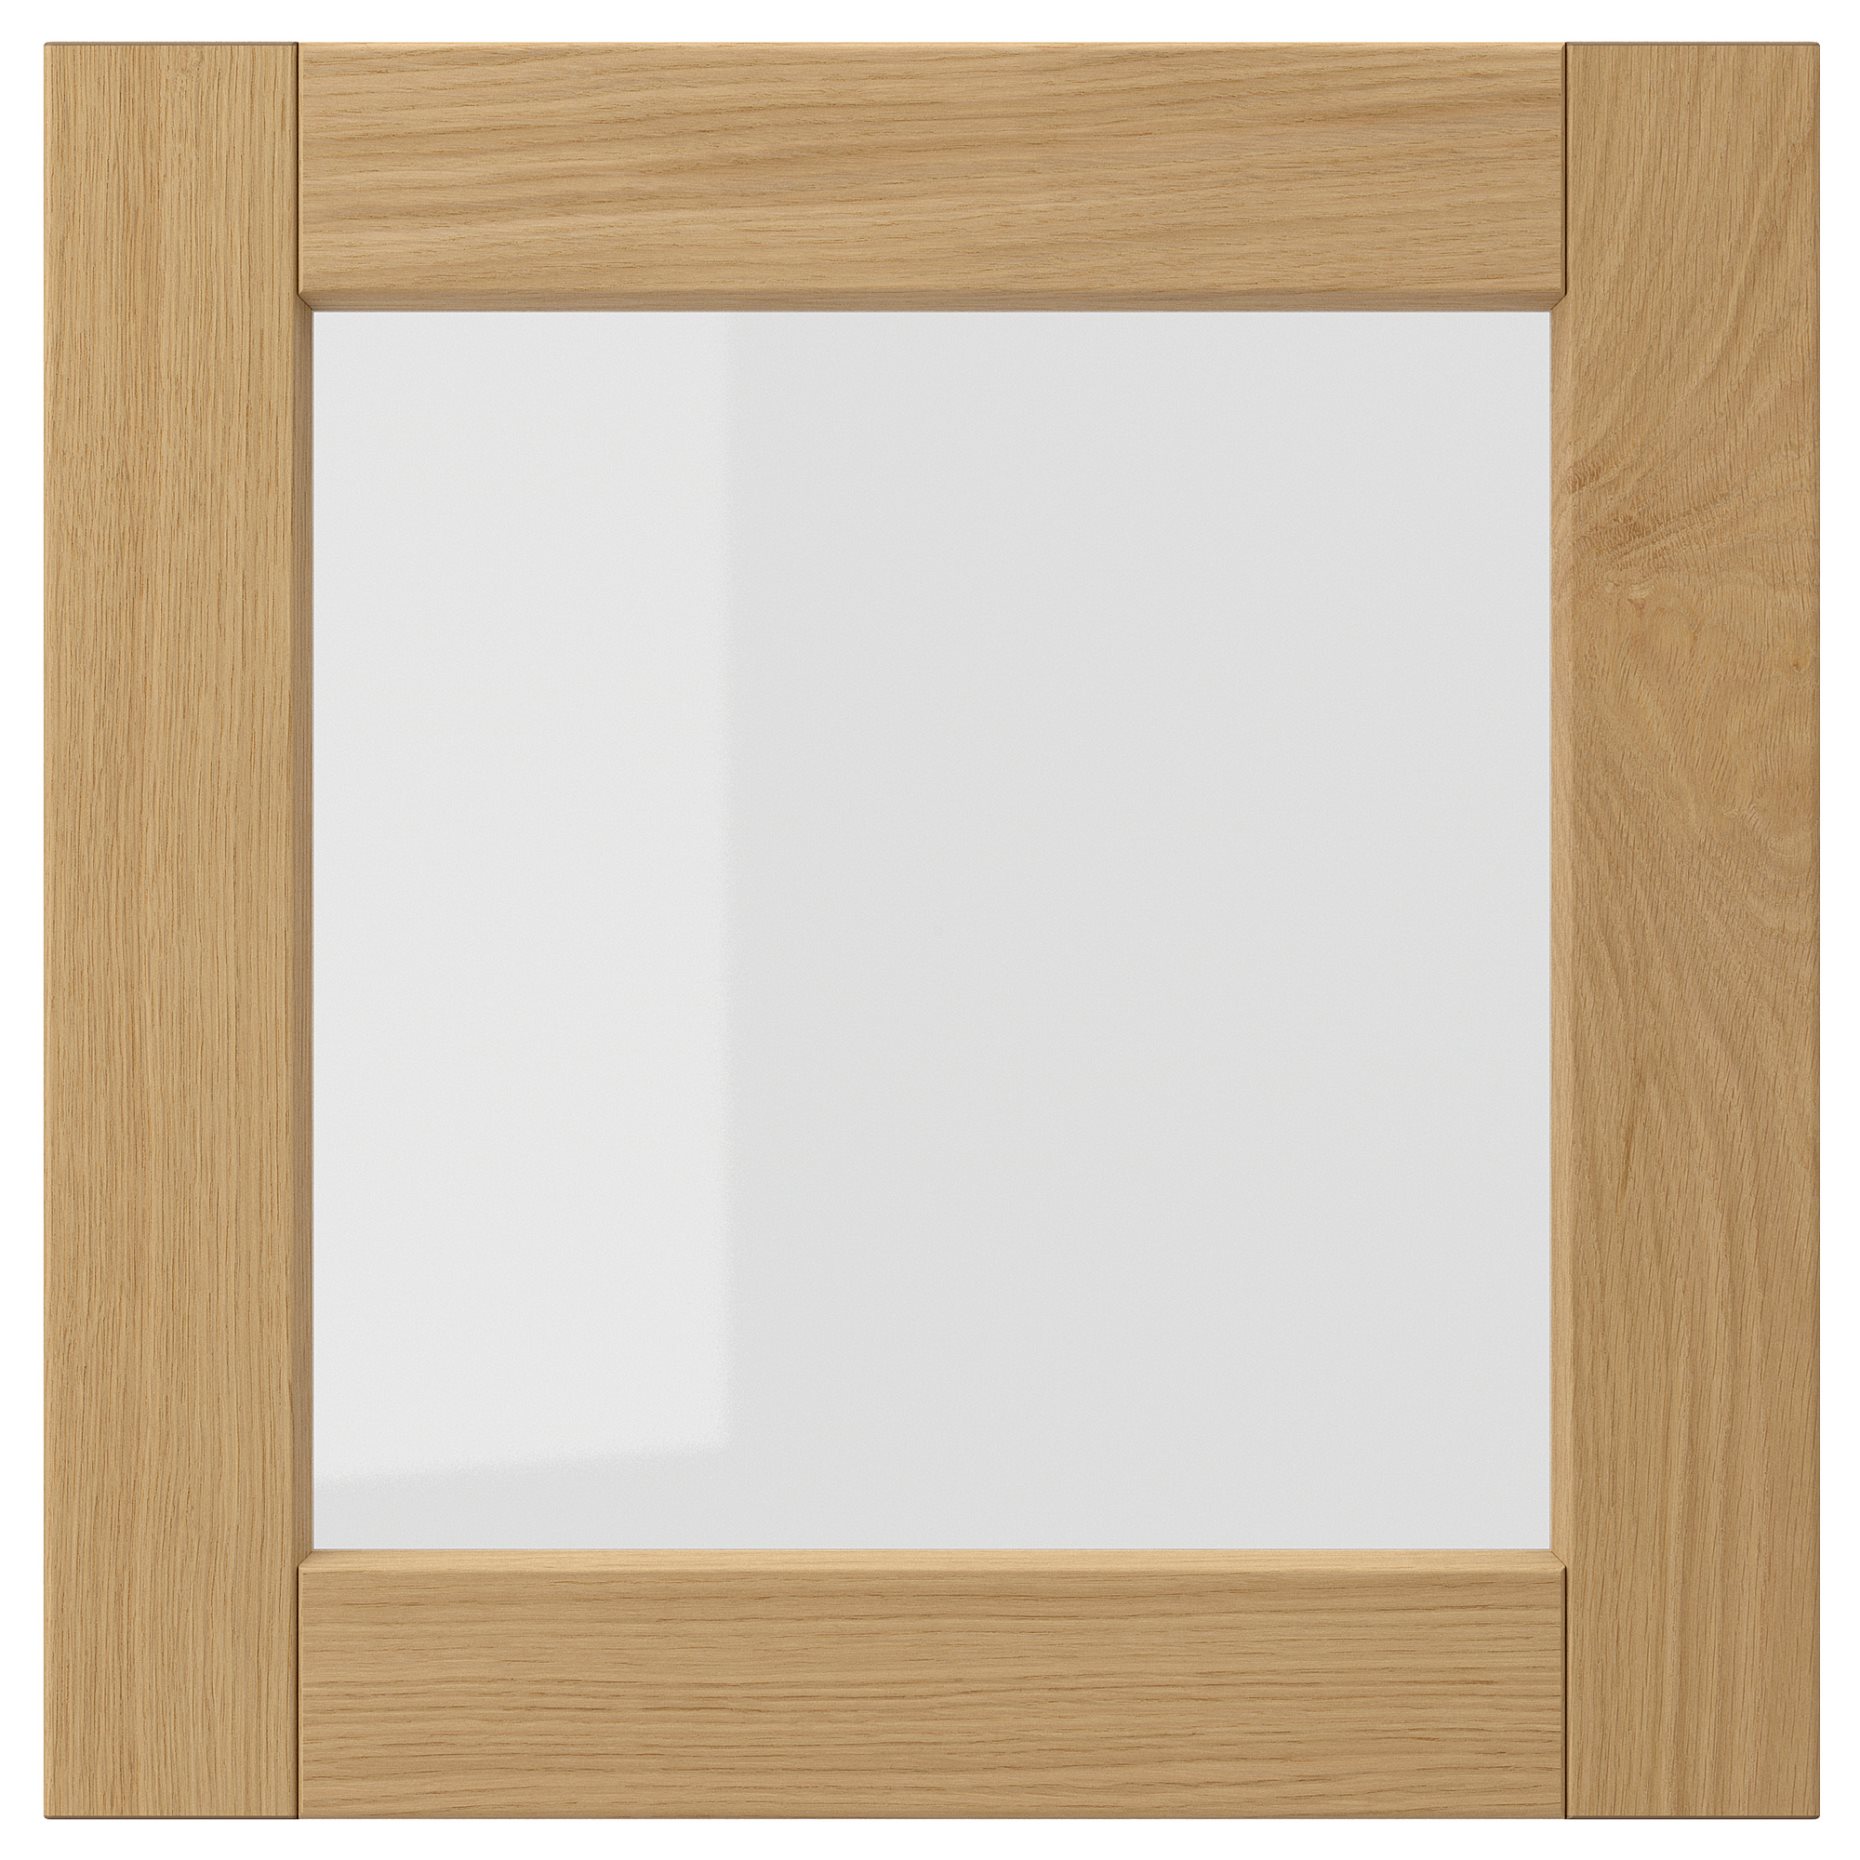 FORSBACKA, γυάλινη πόρτα, 40x40 cm, 305.652.57